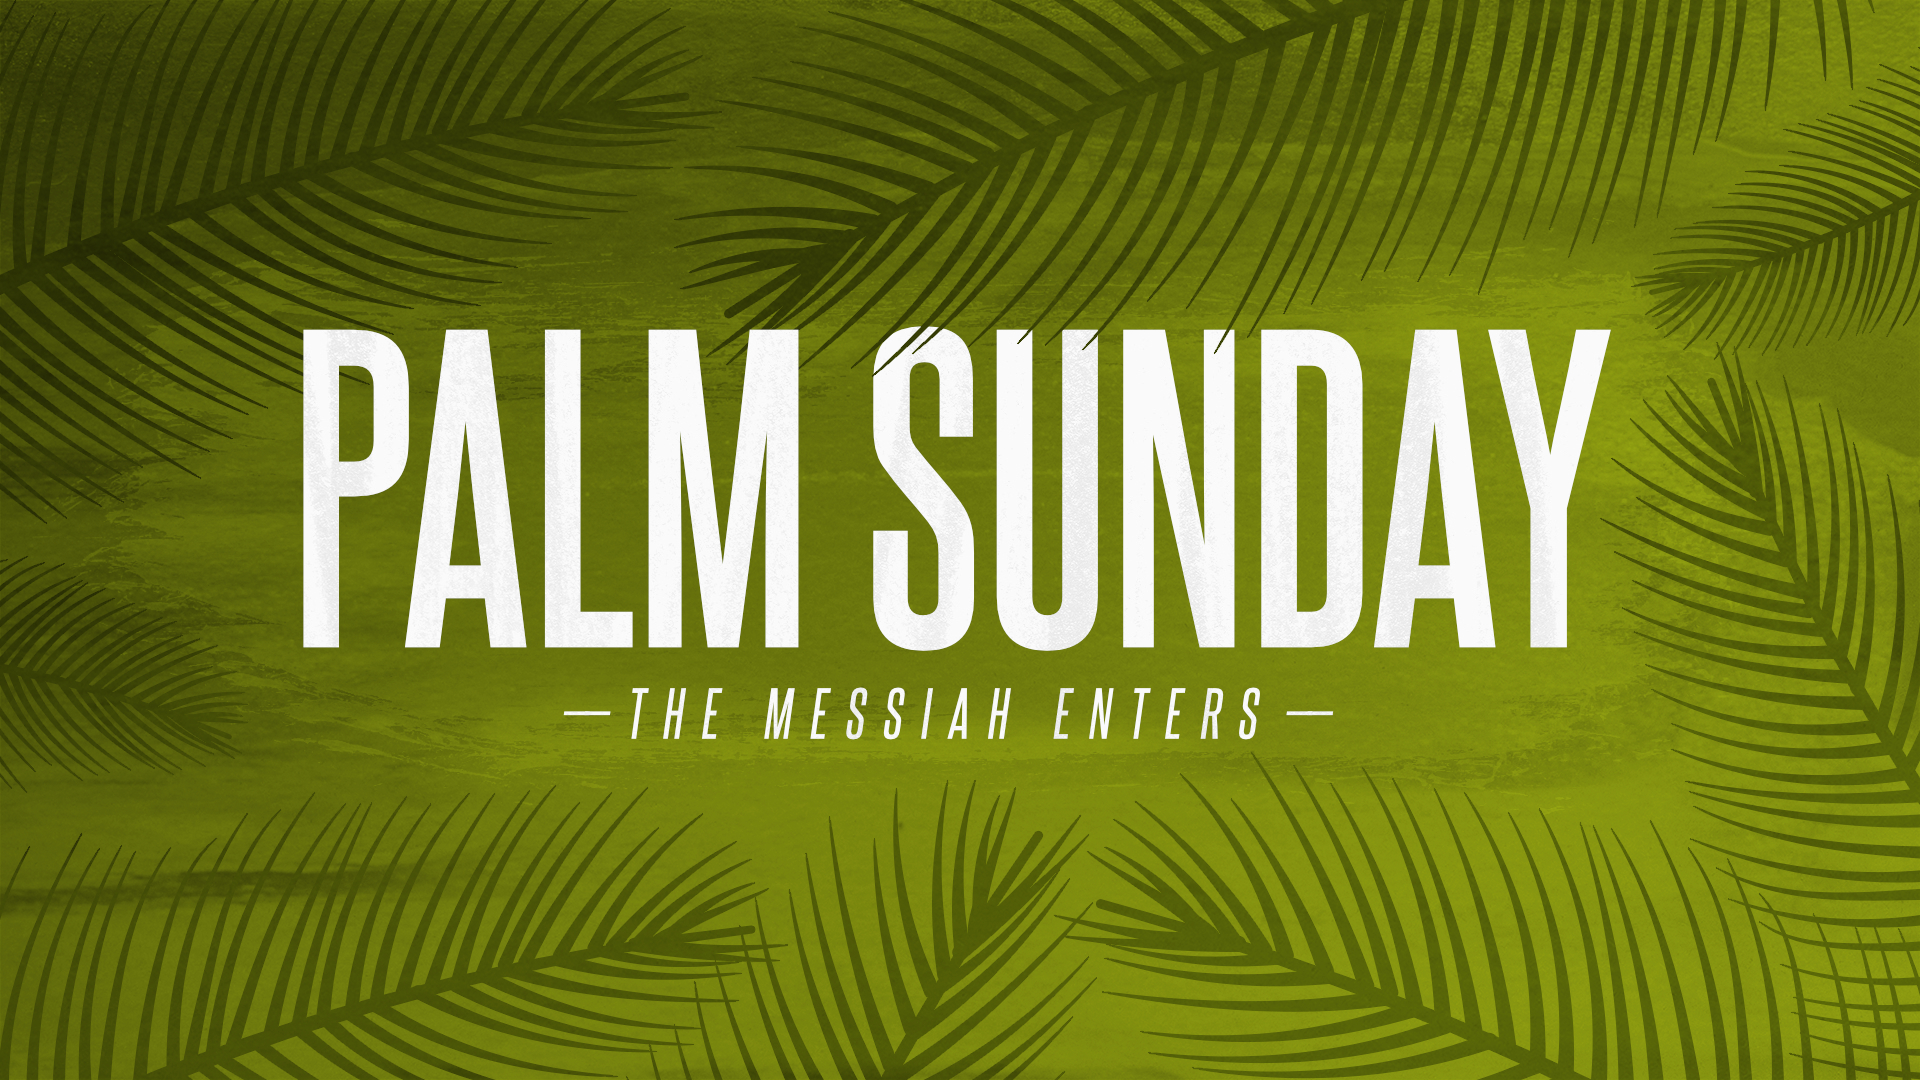 Palm Sunday - The Messiah Enters • April 9, 2017